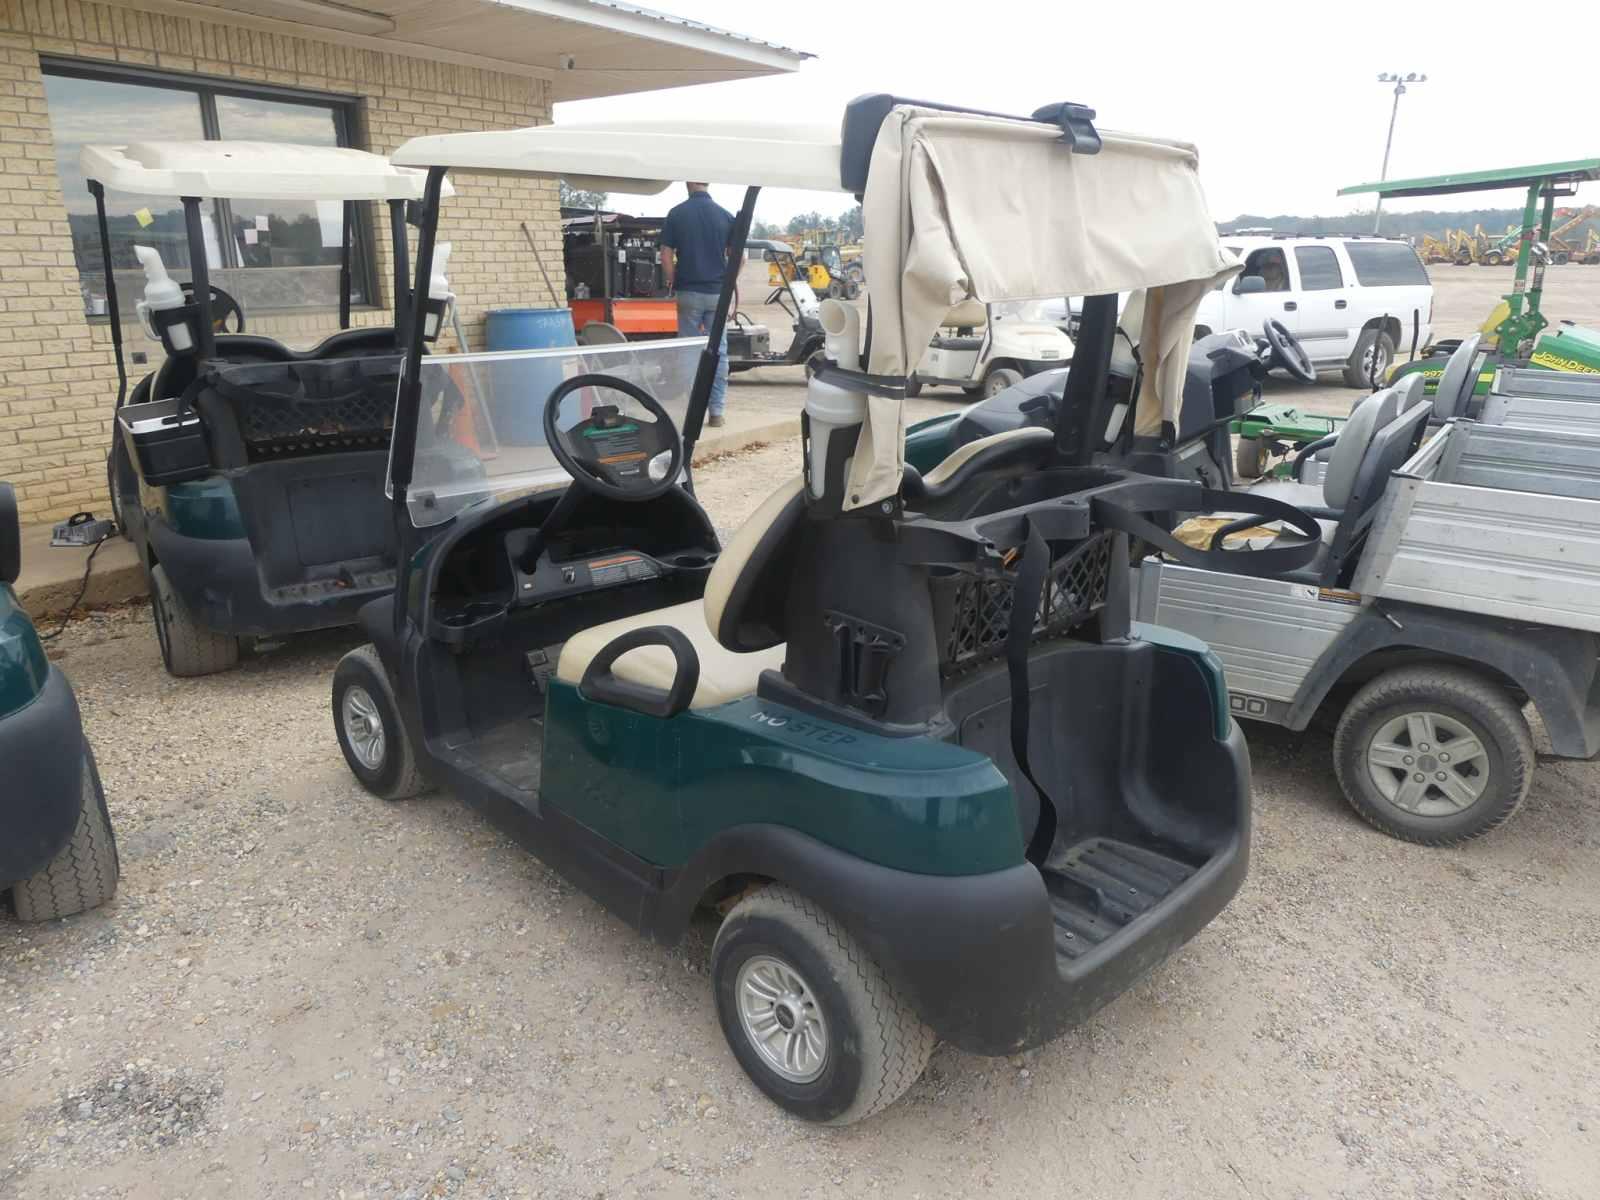 2019 Club Car Precednt Electric Golf Cart, s/n JE1945-024535 (No Title): w/